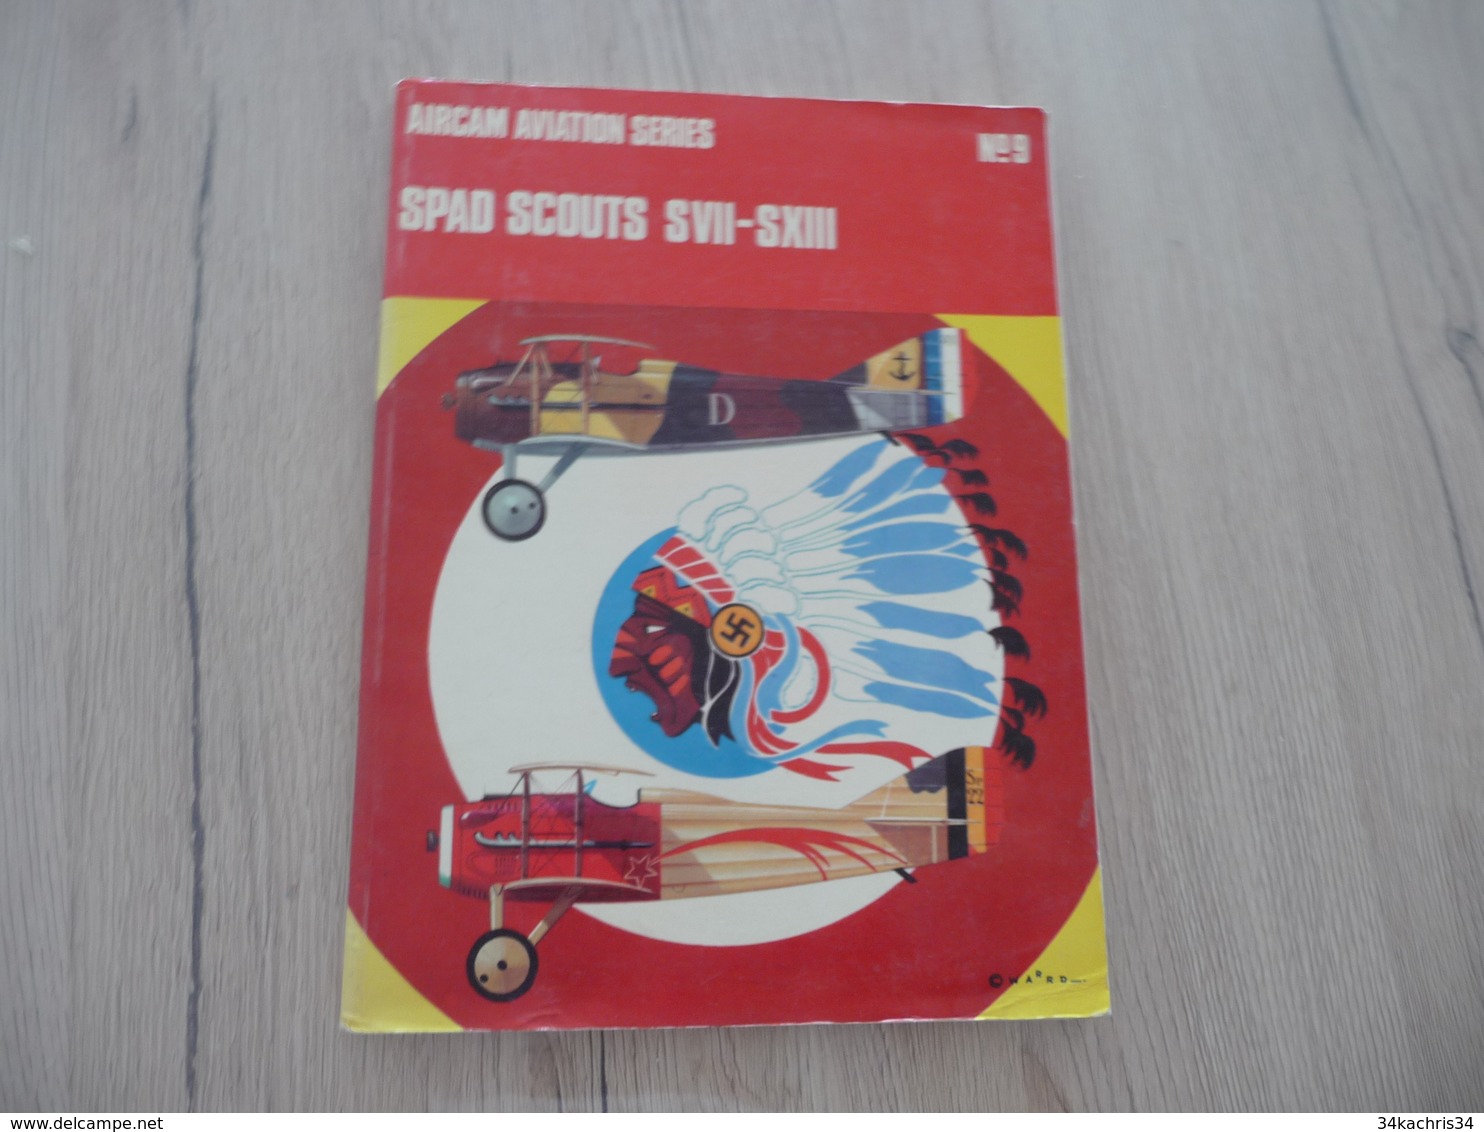 Livre En Anglais Avion Aviation Aircan Aviation Series 9 Spad Scouts SVII-SXIII - Anglais